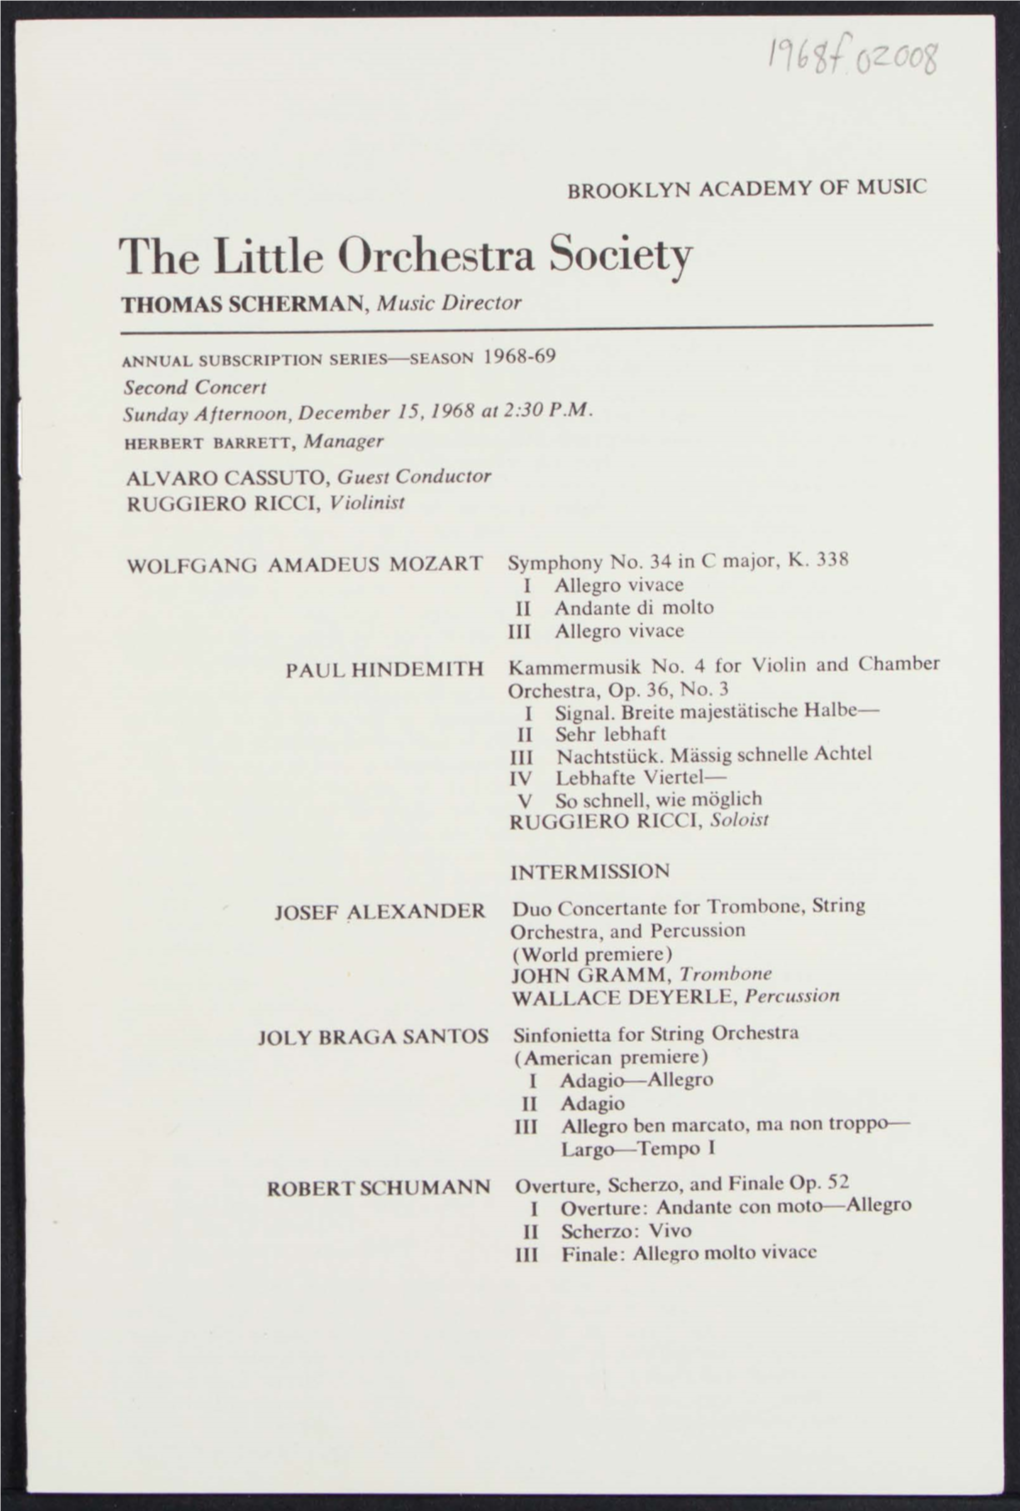 The Little Orchestra Society THOMAS SCHERMAN, Music Director